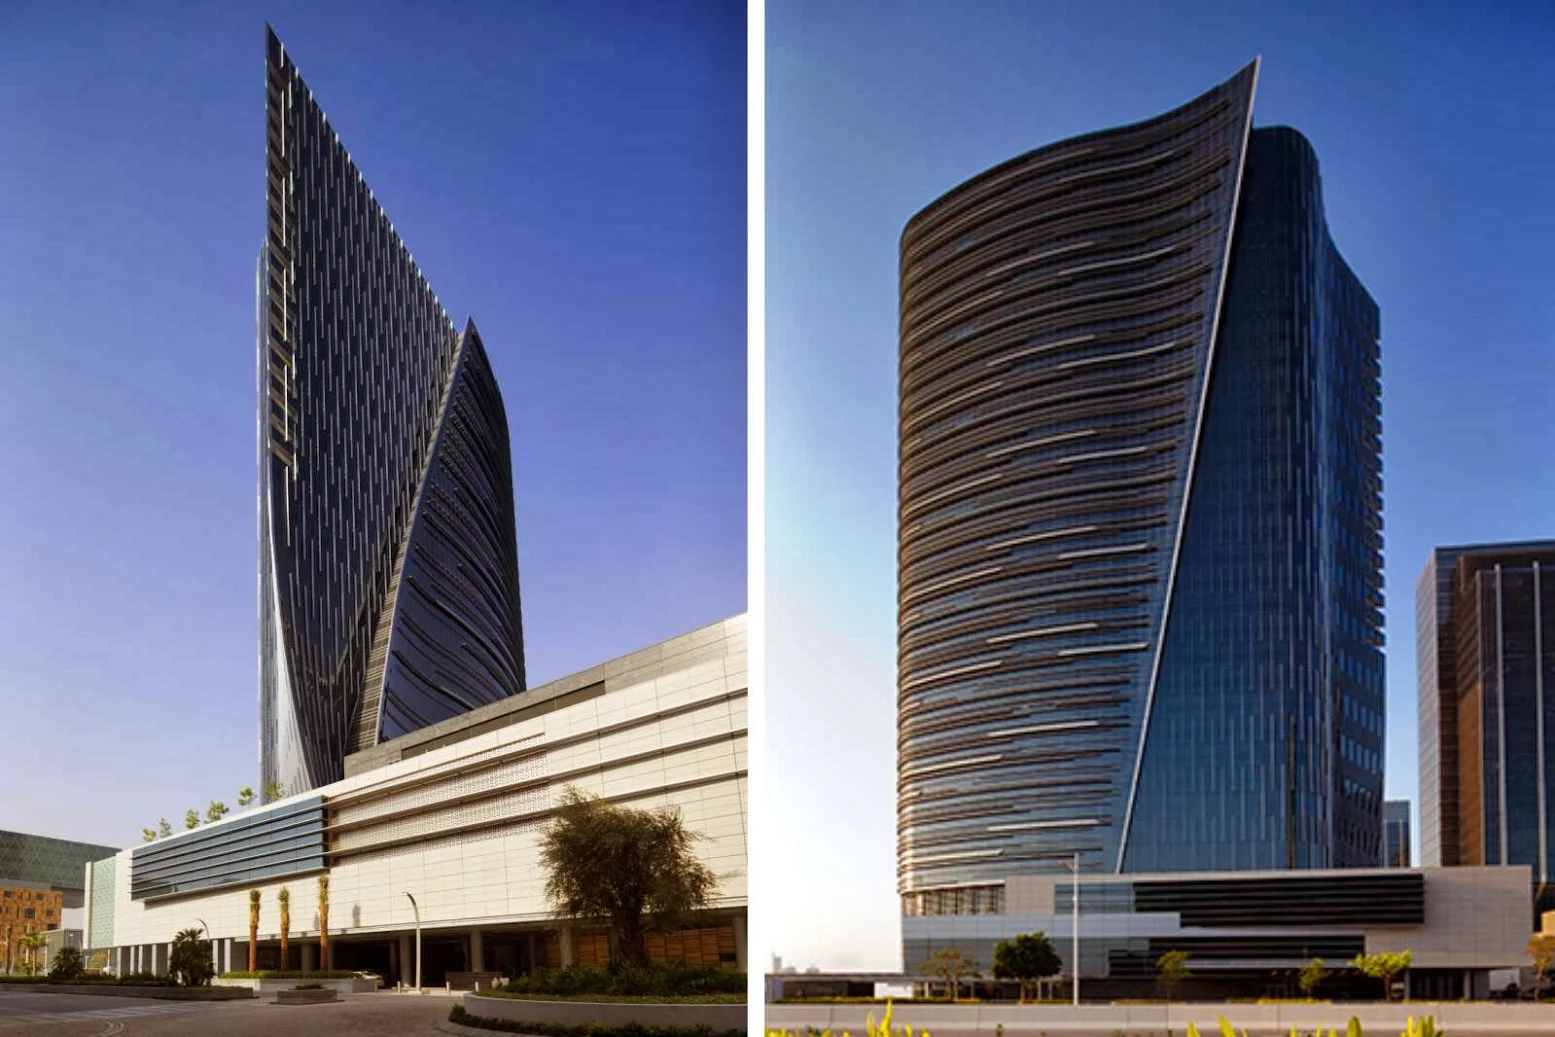 Rosewood Abu Dhabi by Handel Architects